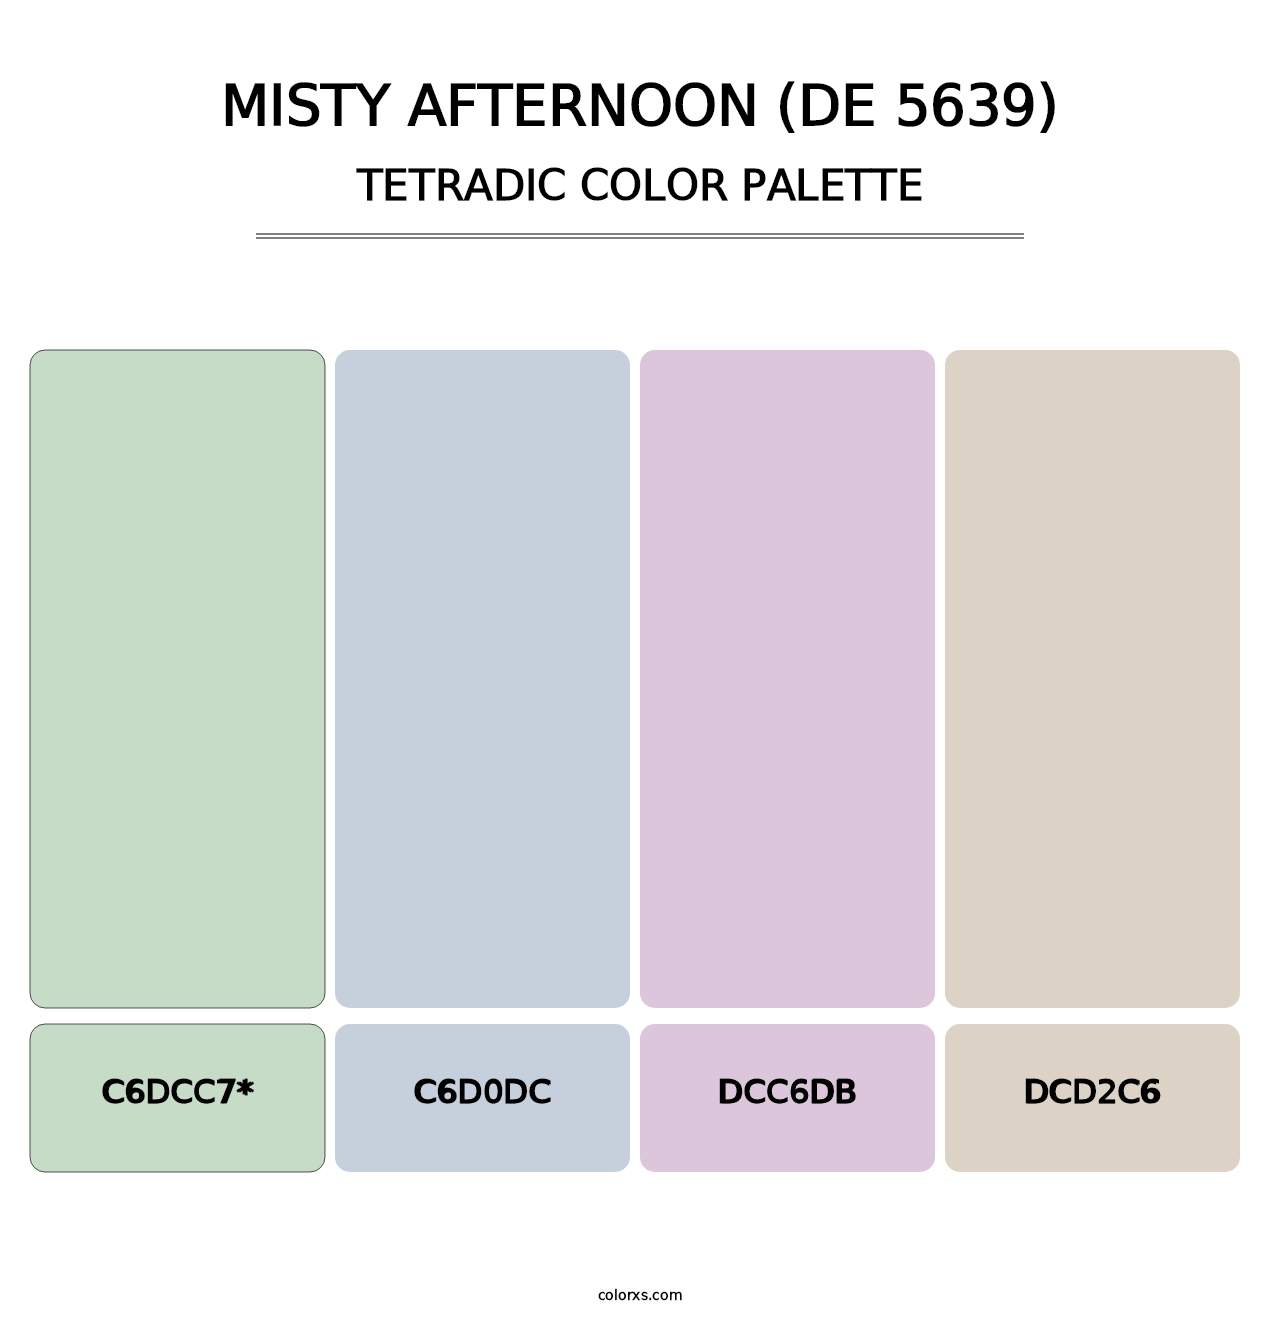 Misty Afternoon (DE 5639) - Tetradic Color Palette